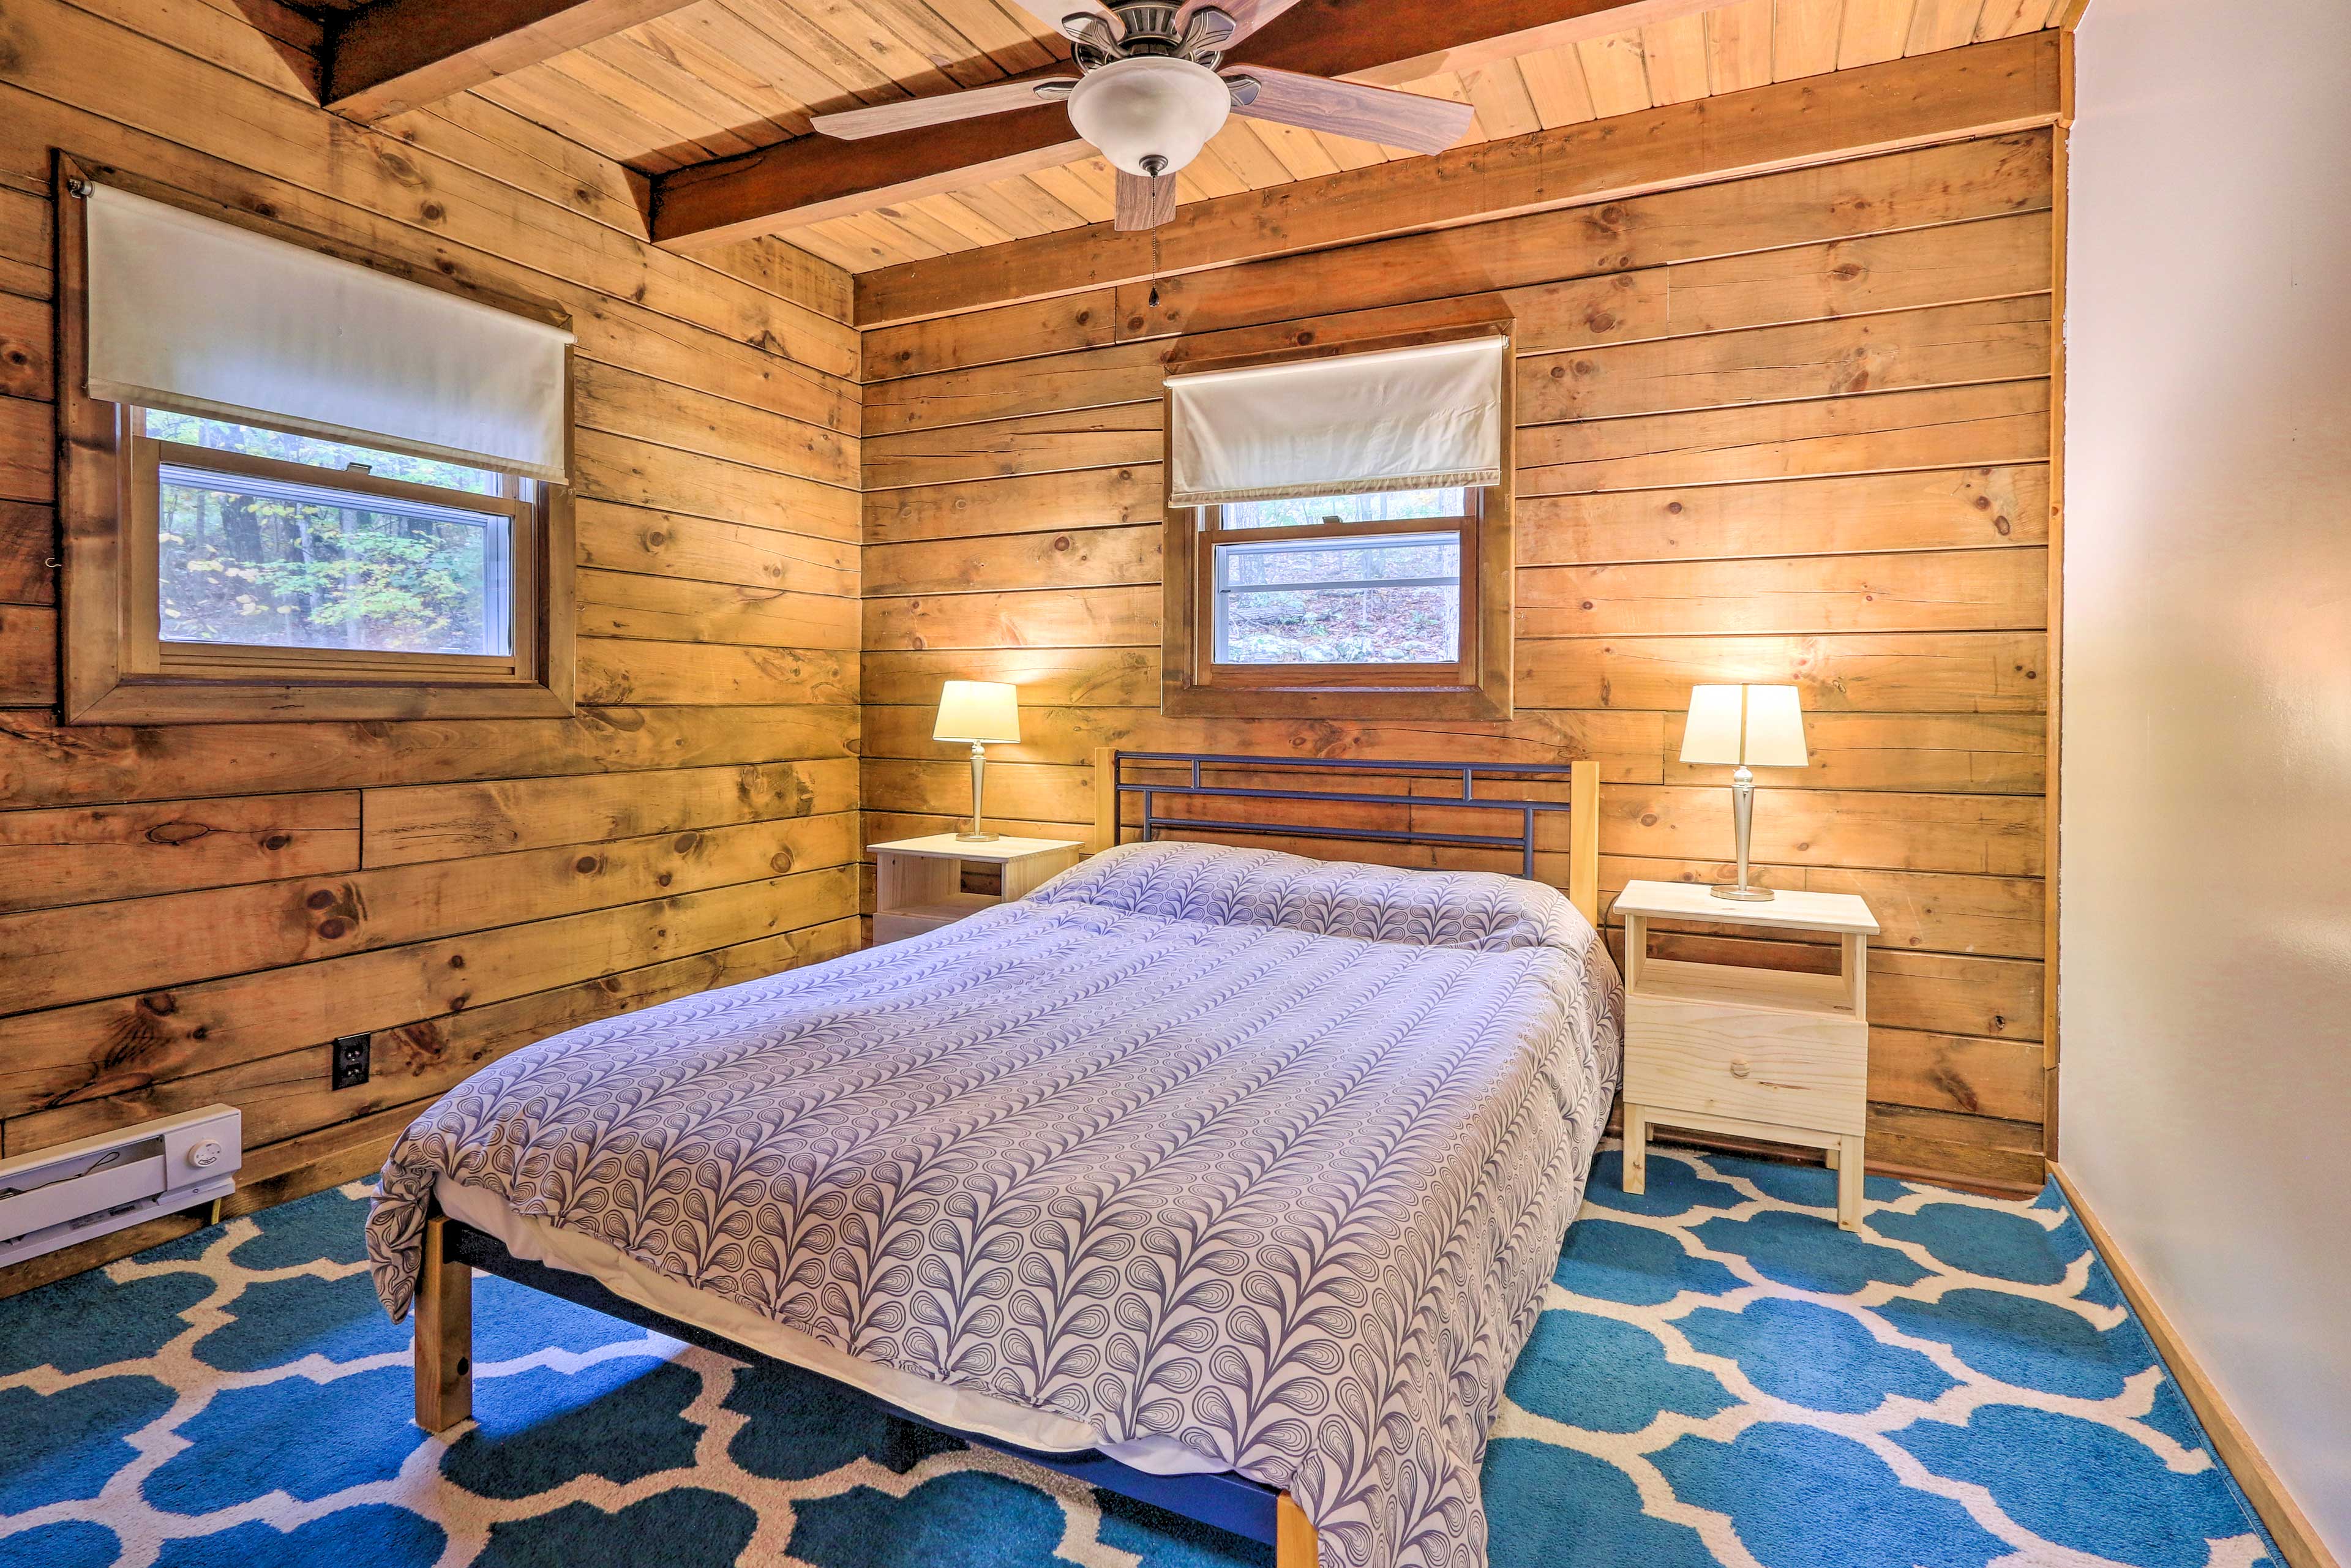 Rustic Log Cabin w/ Updated Interior & Deck!